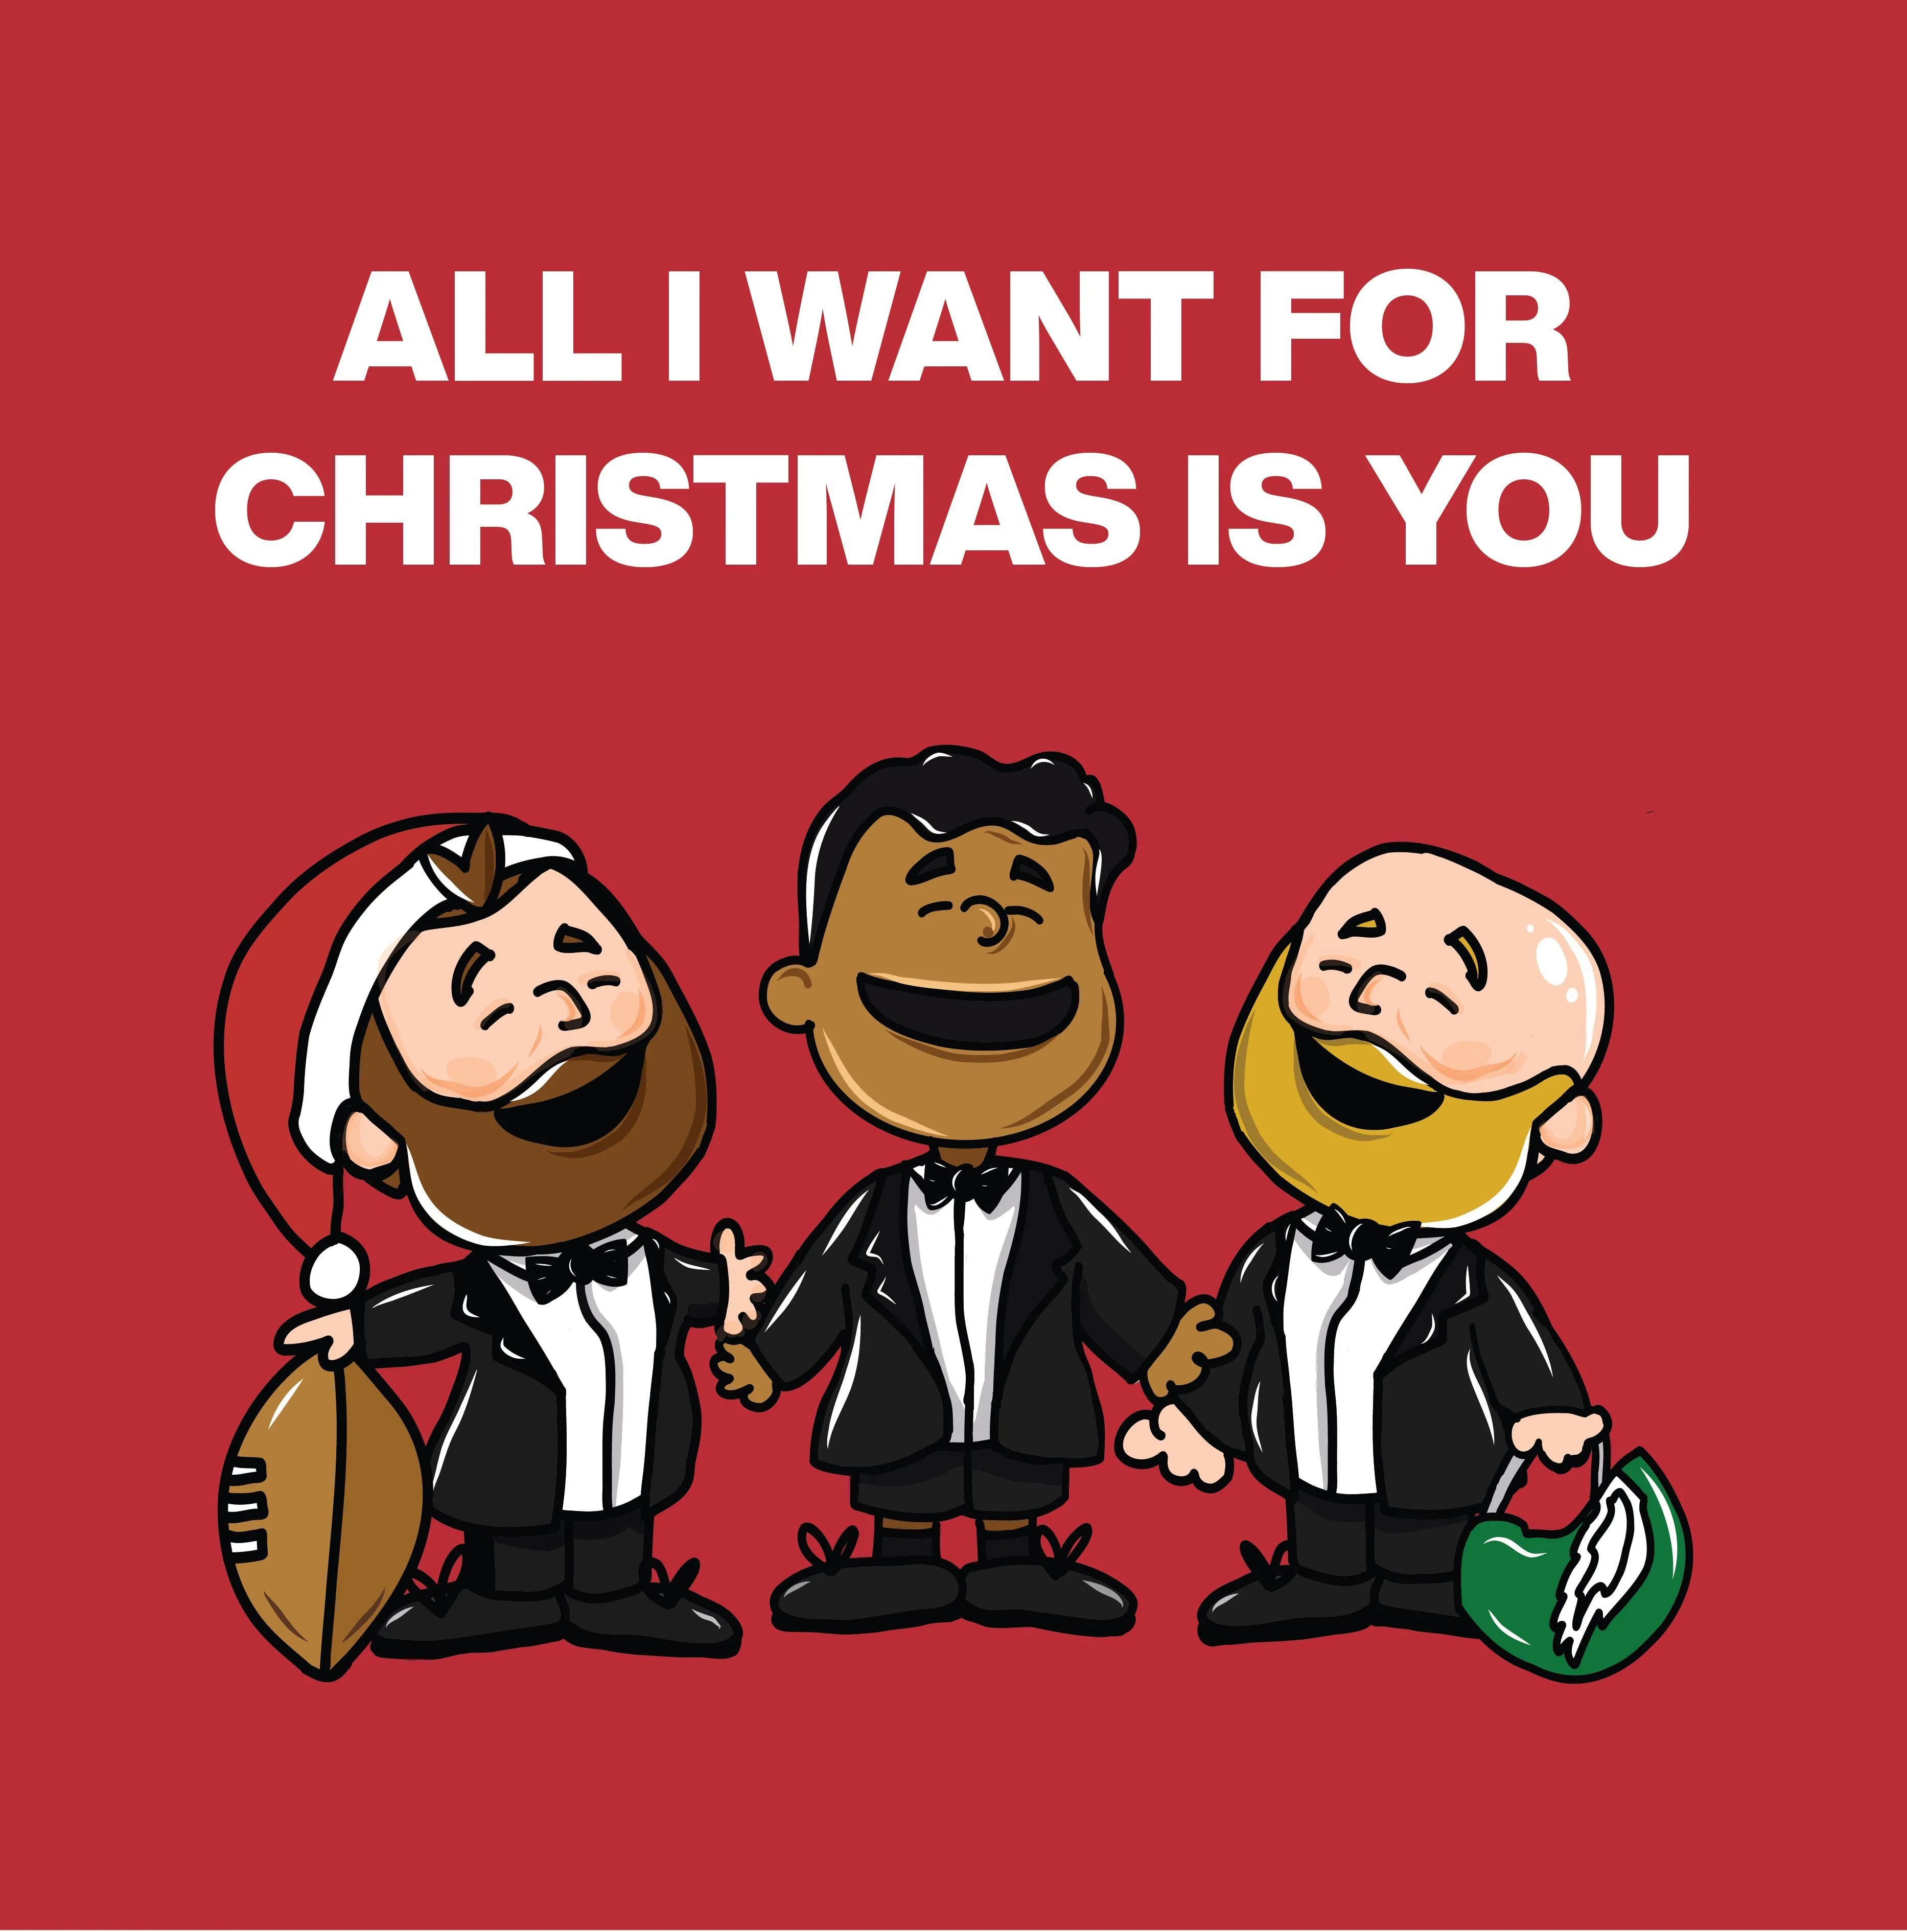 Hey Siri 🎧 play “All I want for Christmas” by Mariah Carey